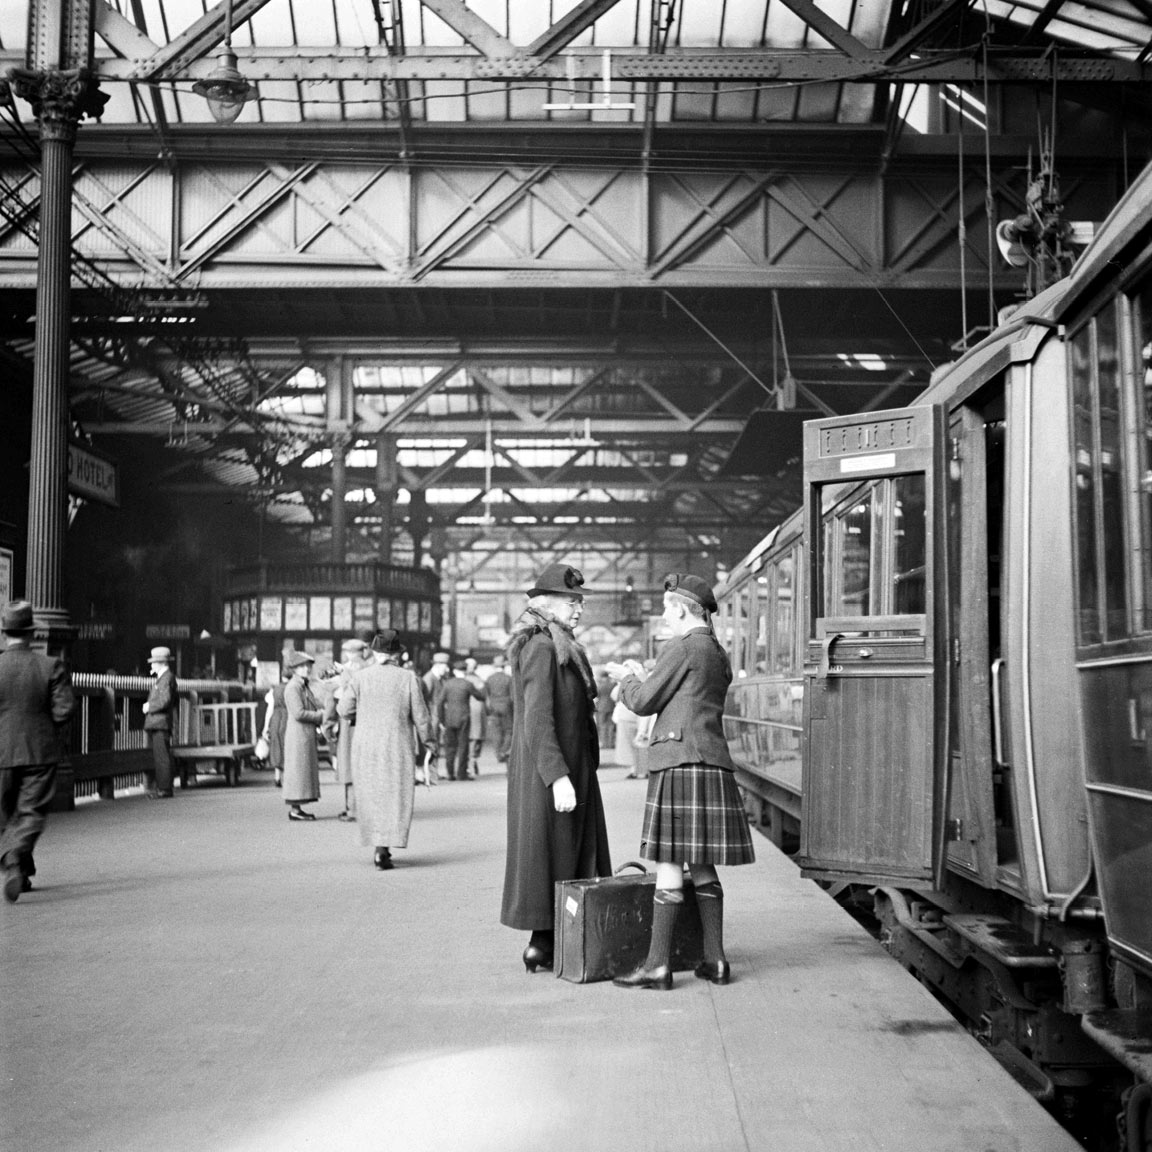 Perron Edinburgh Waverley station, 1938 | Foto: Willem van de Poll/Nationaal Archief CC-BY-SA